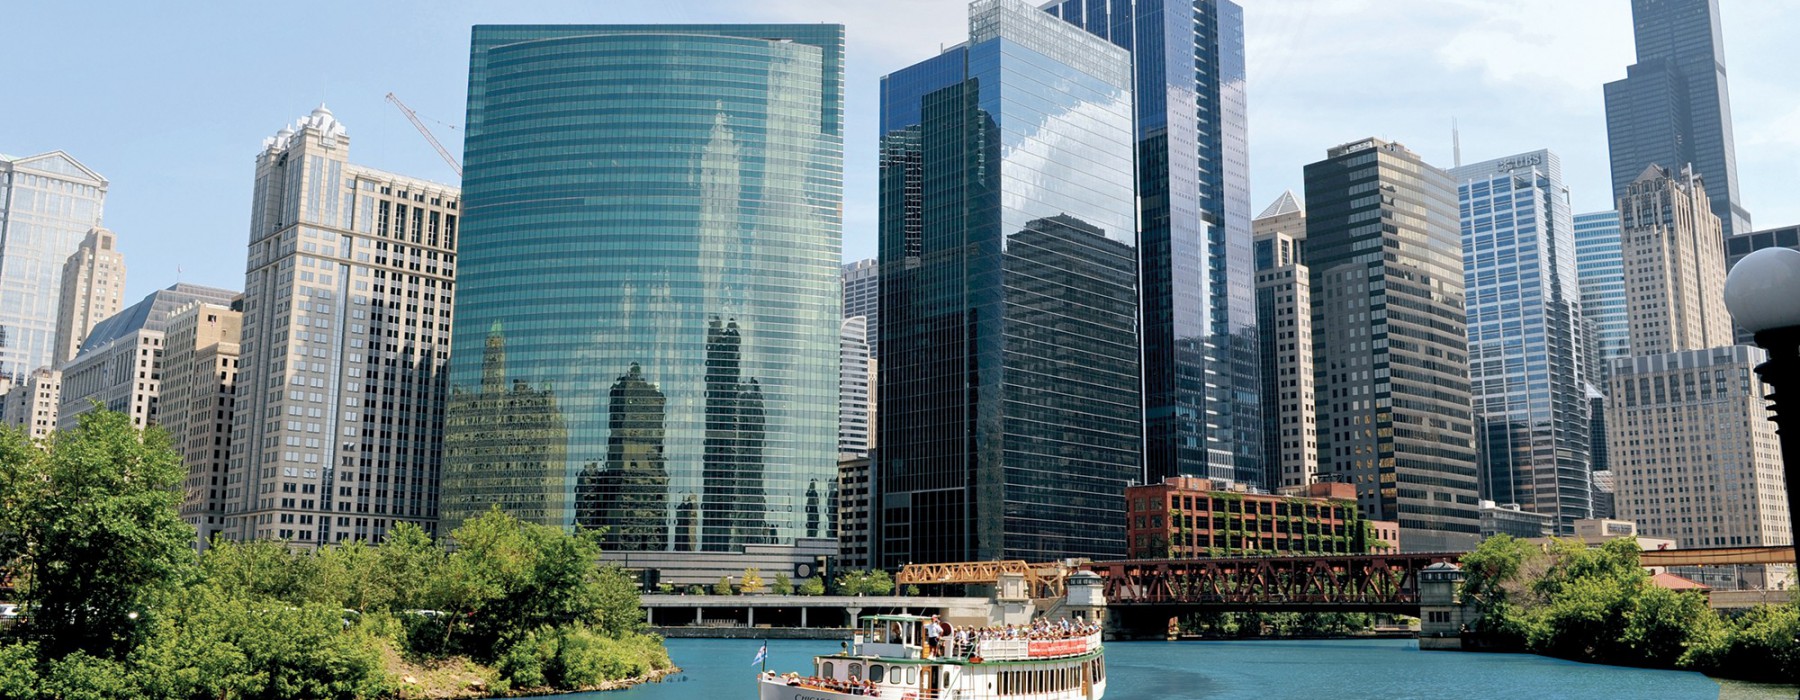 chicago-architecture-foundation-river-cruise-chica-5-1800×700